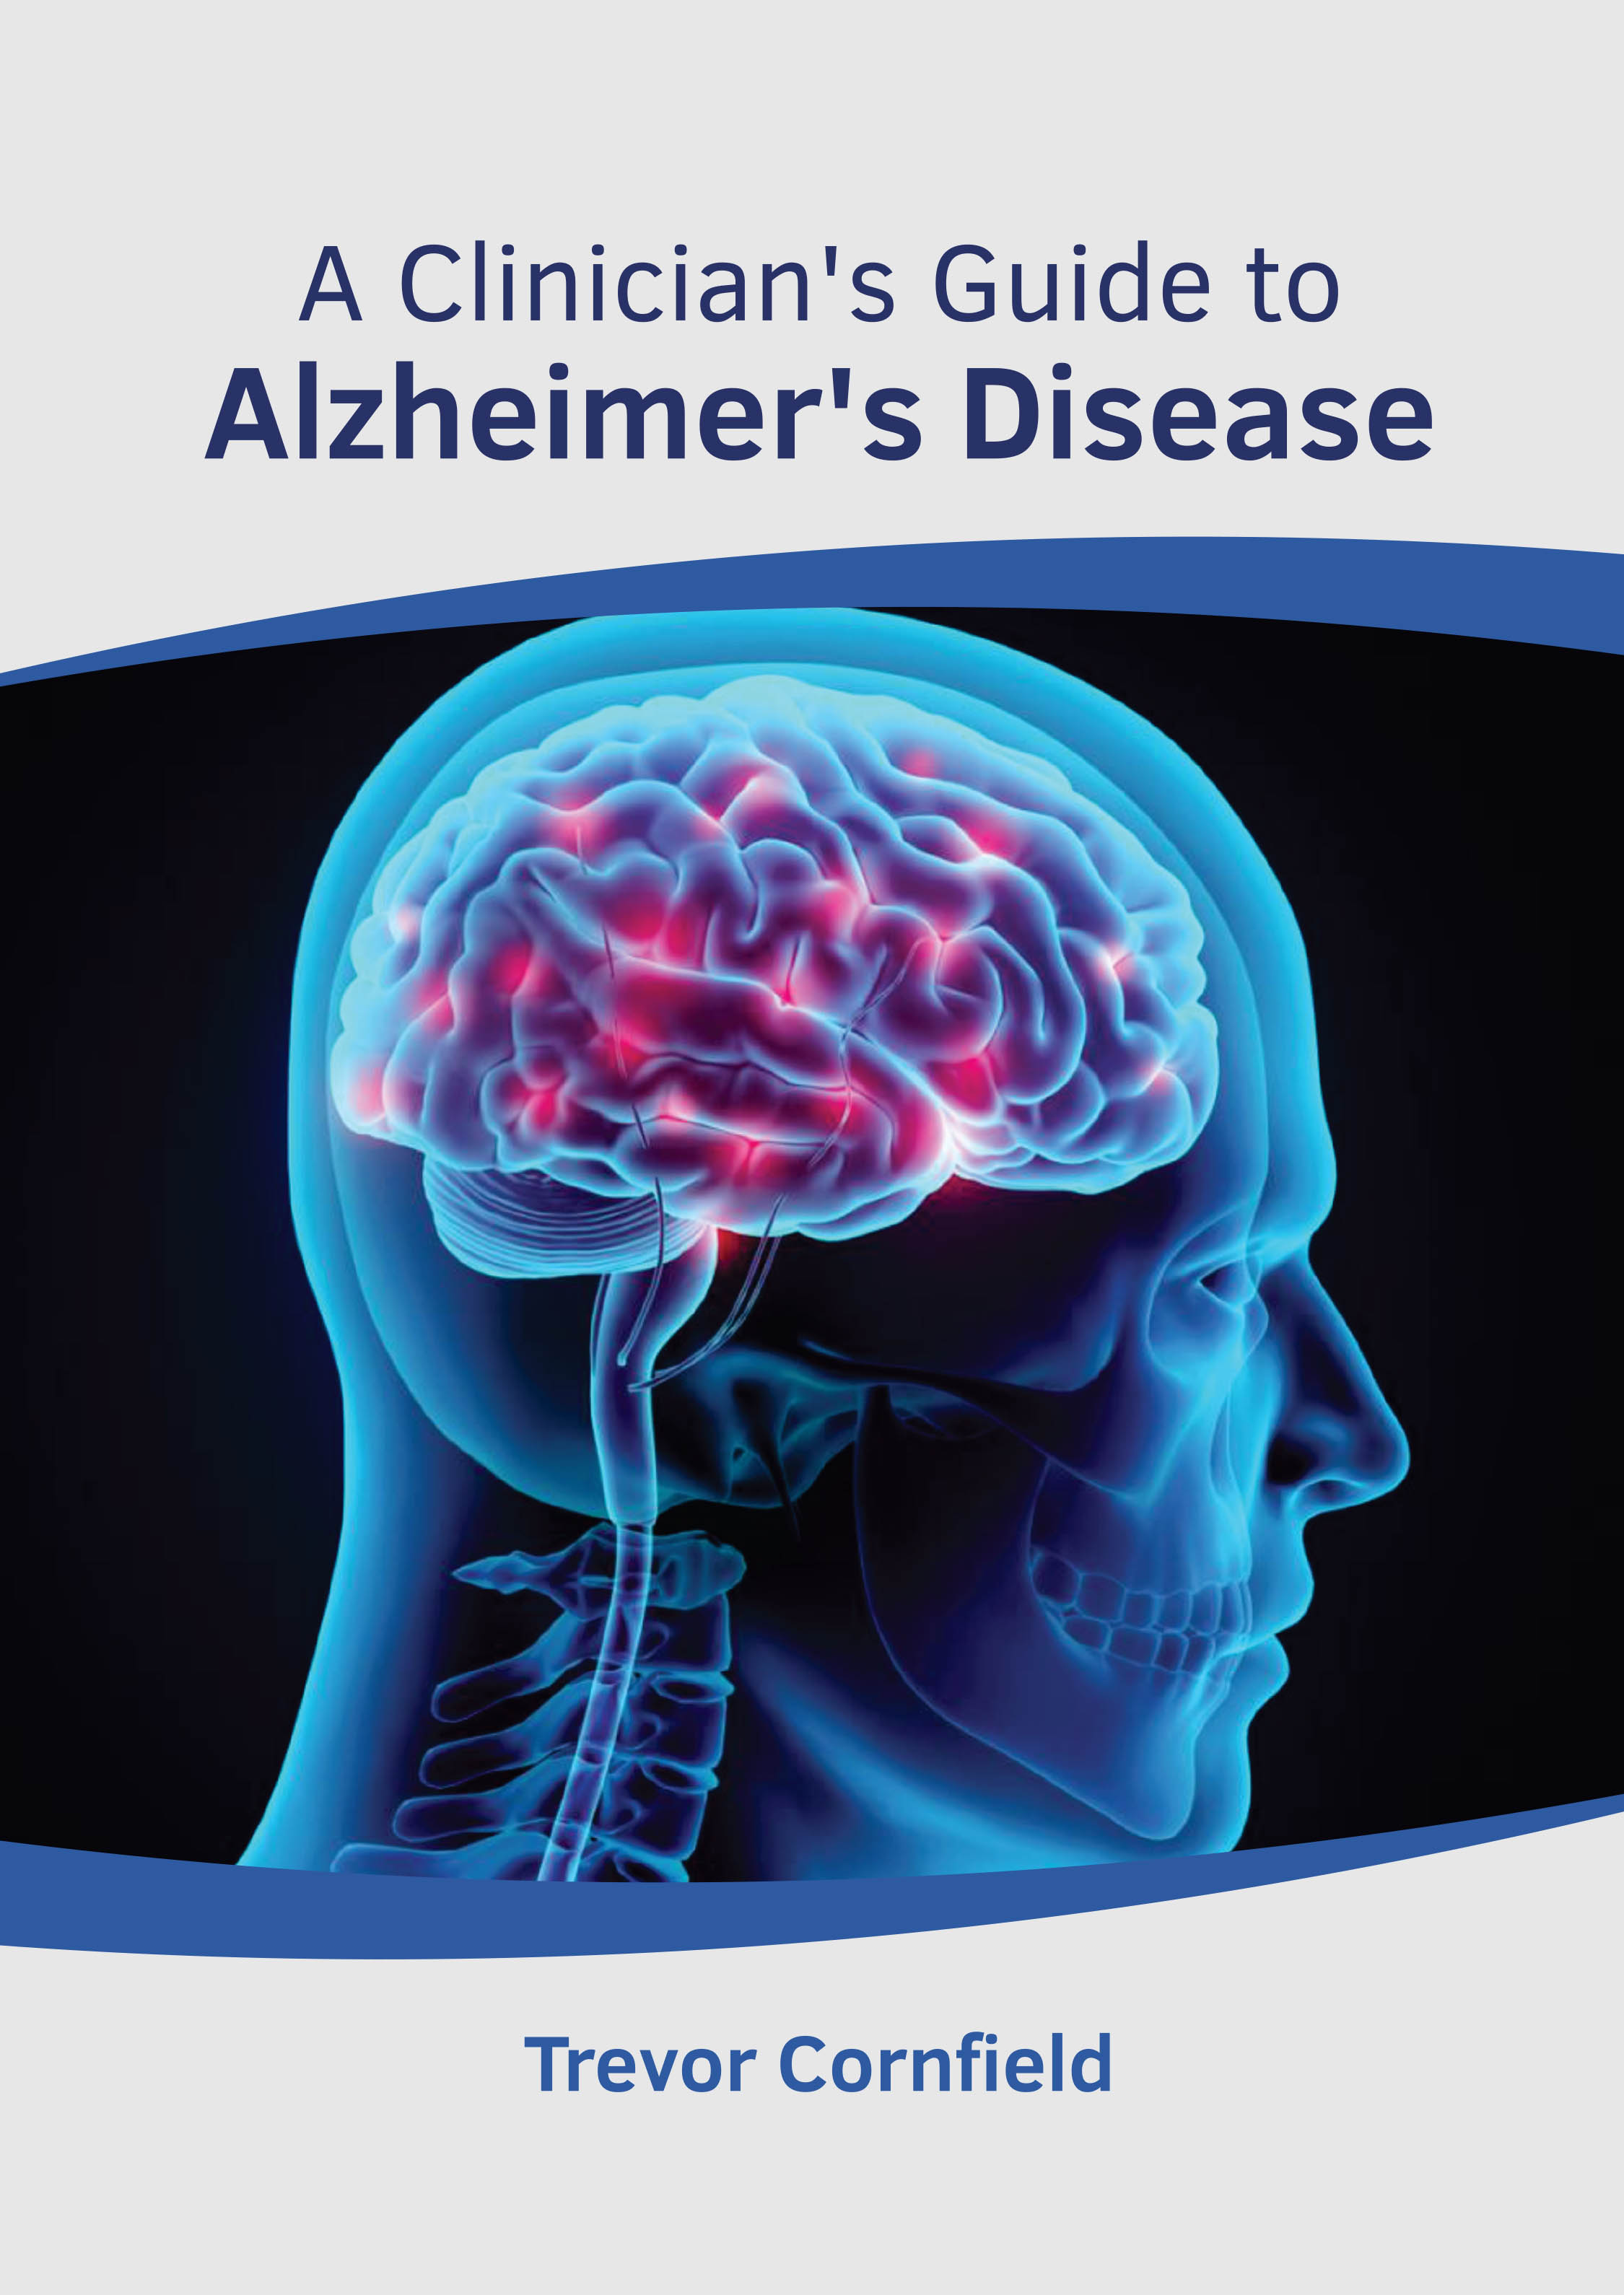 A CLINICIAN'S GUIDE TO ALZHEIMER'S DISEASE | ISBN: 9781639274321